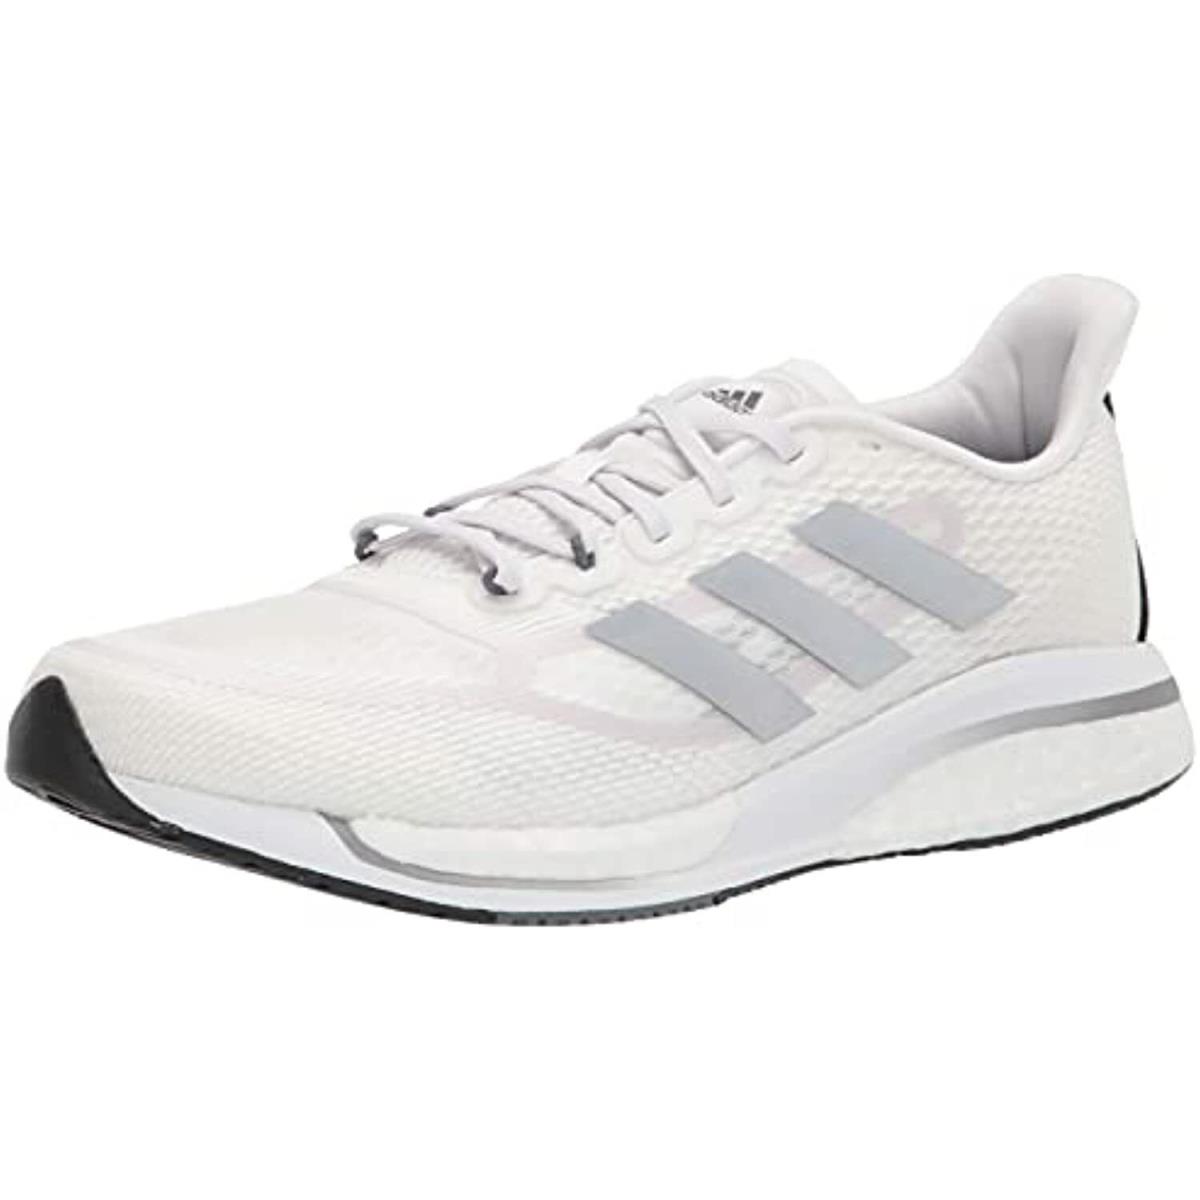 Adidas Women`s Supernova Running Sneaker FX2858 White/silver Metallic Size 6M - White